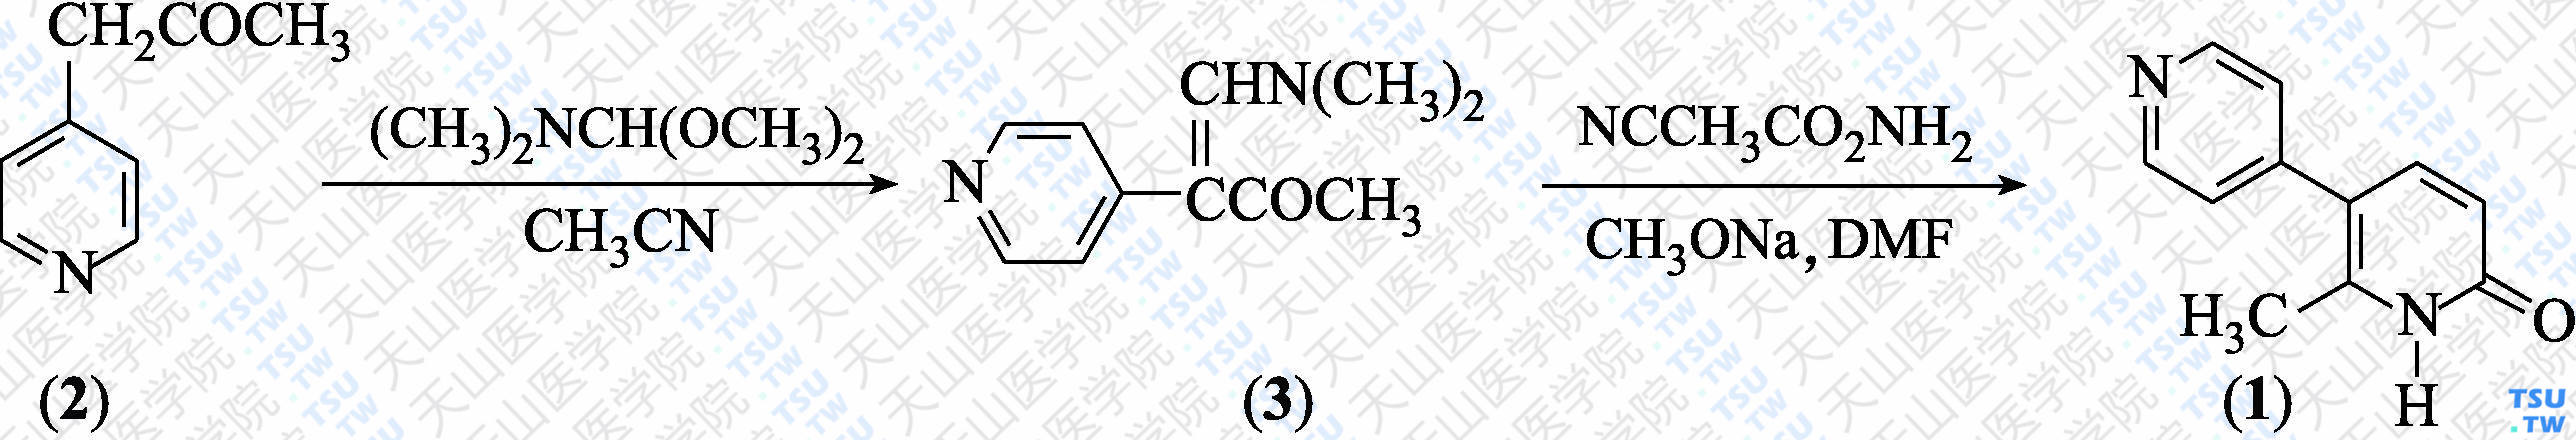 米力农（分子式：C<sub>11</sub>H<sub>10</sub>N<sub>2</sub>O）的合成方法路线及其结构式